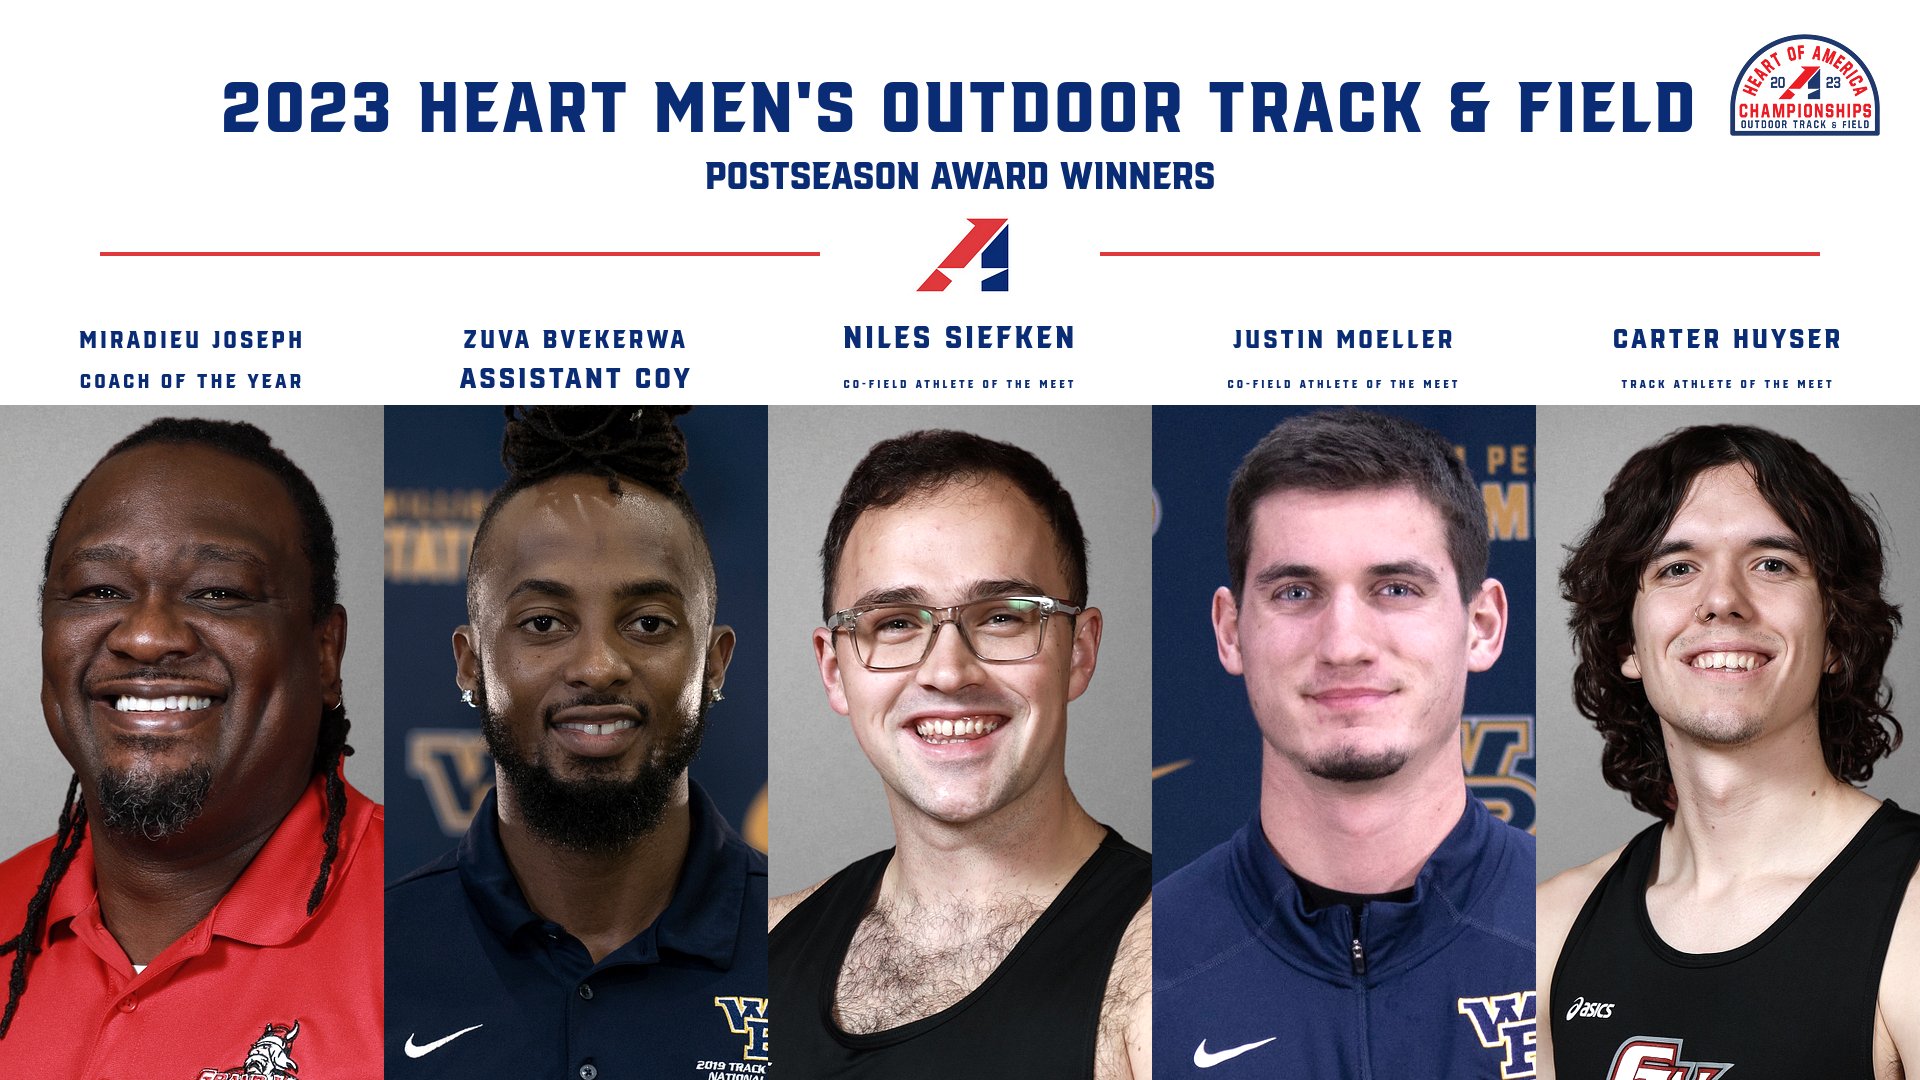 2023 Heart Men's Outdoor Track & Field Postseason Awards Announced